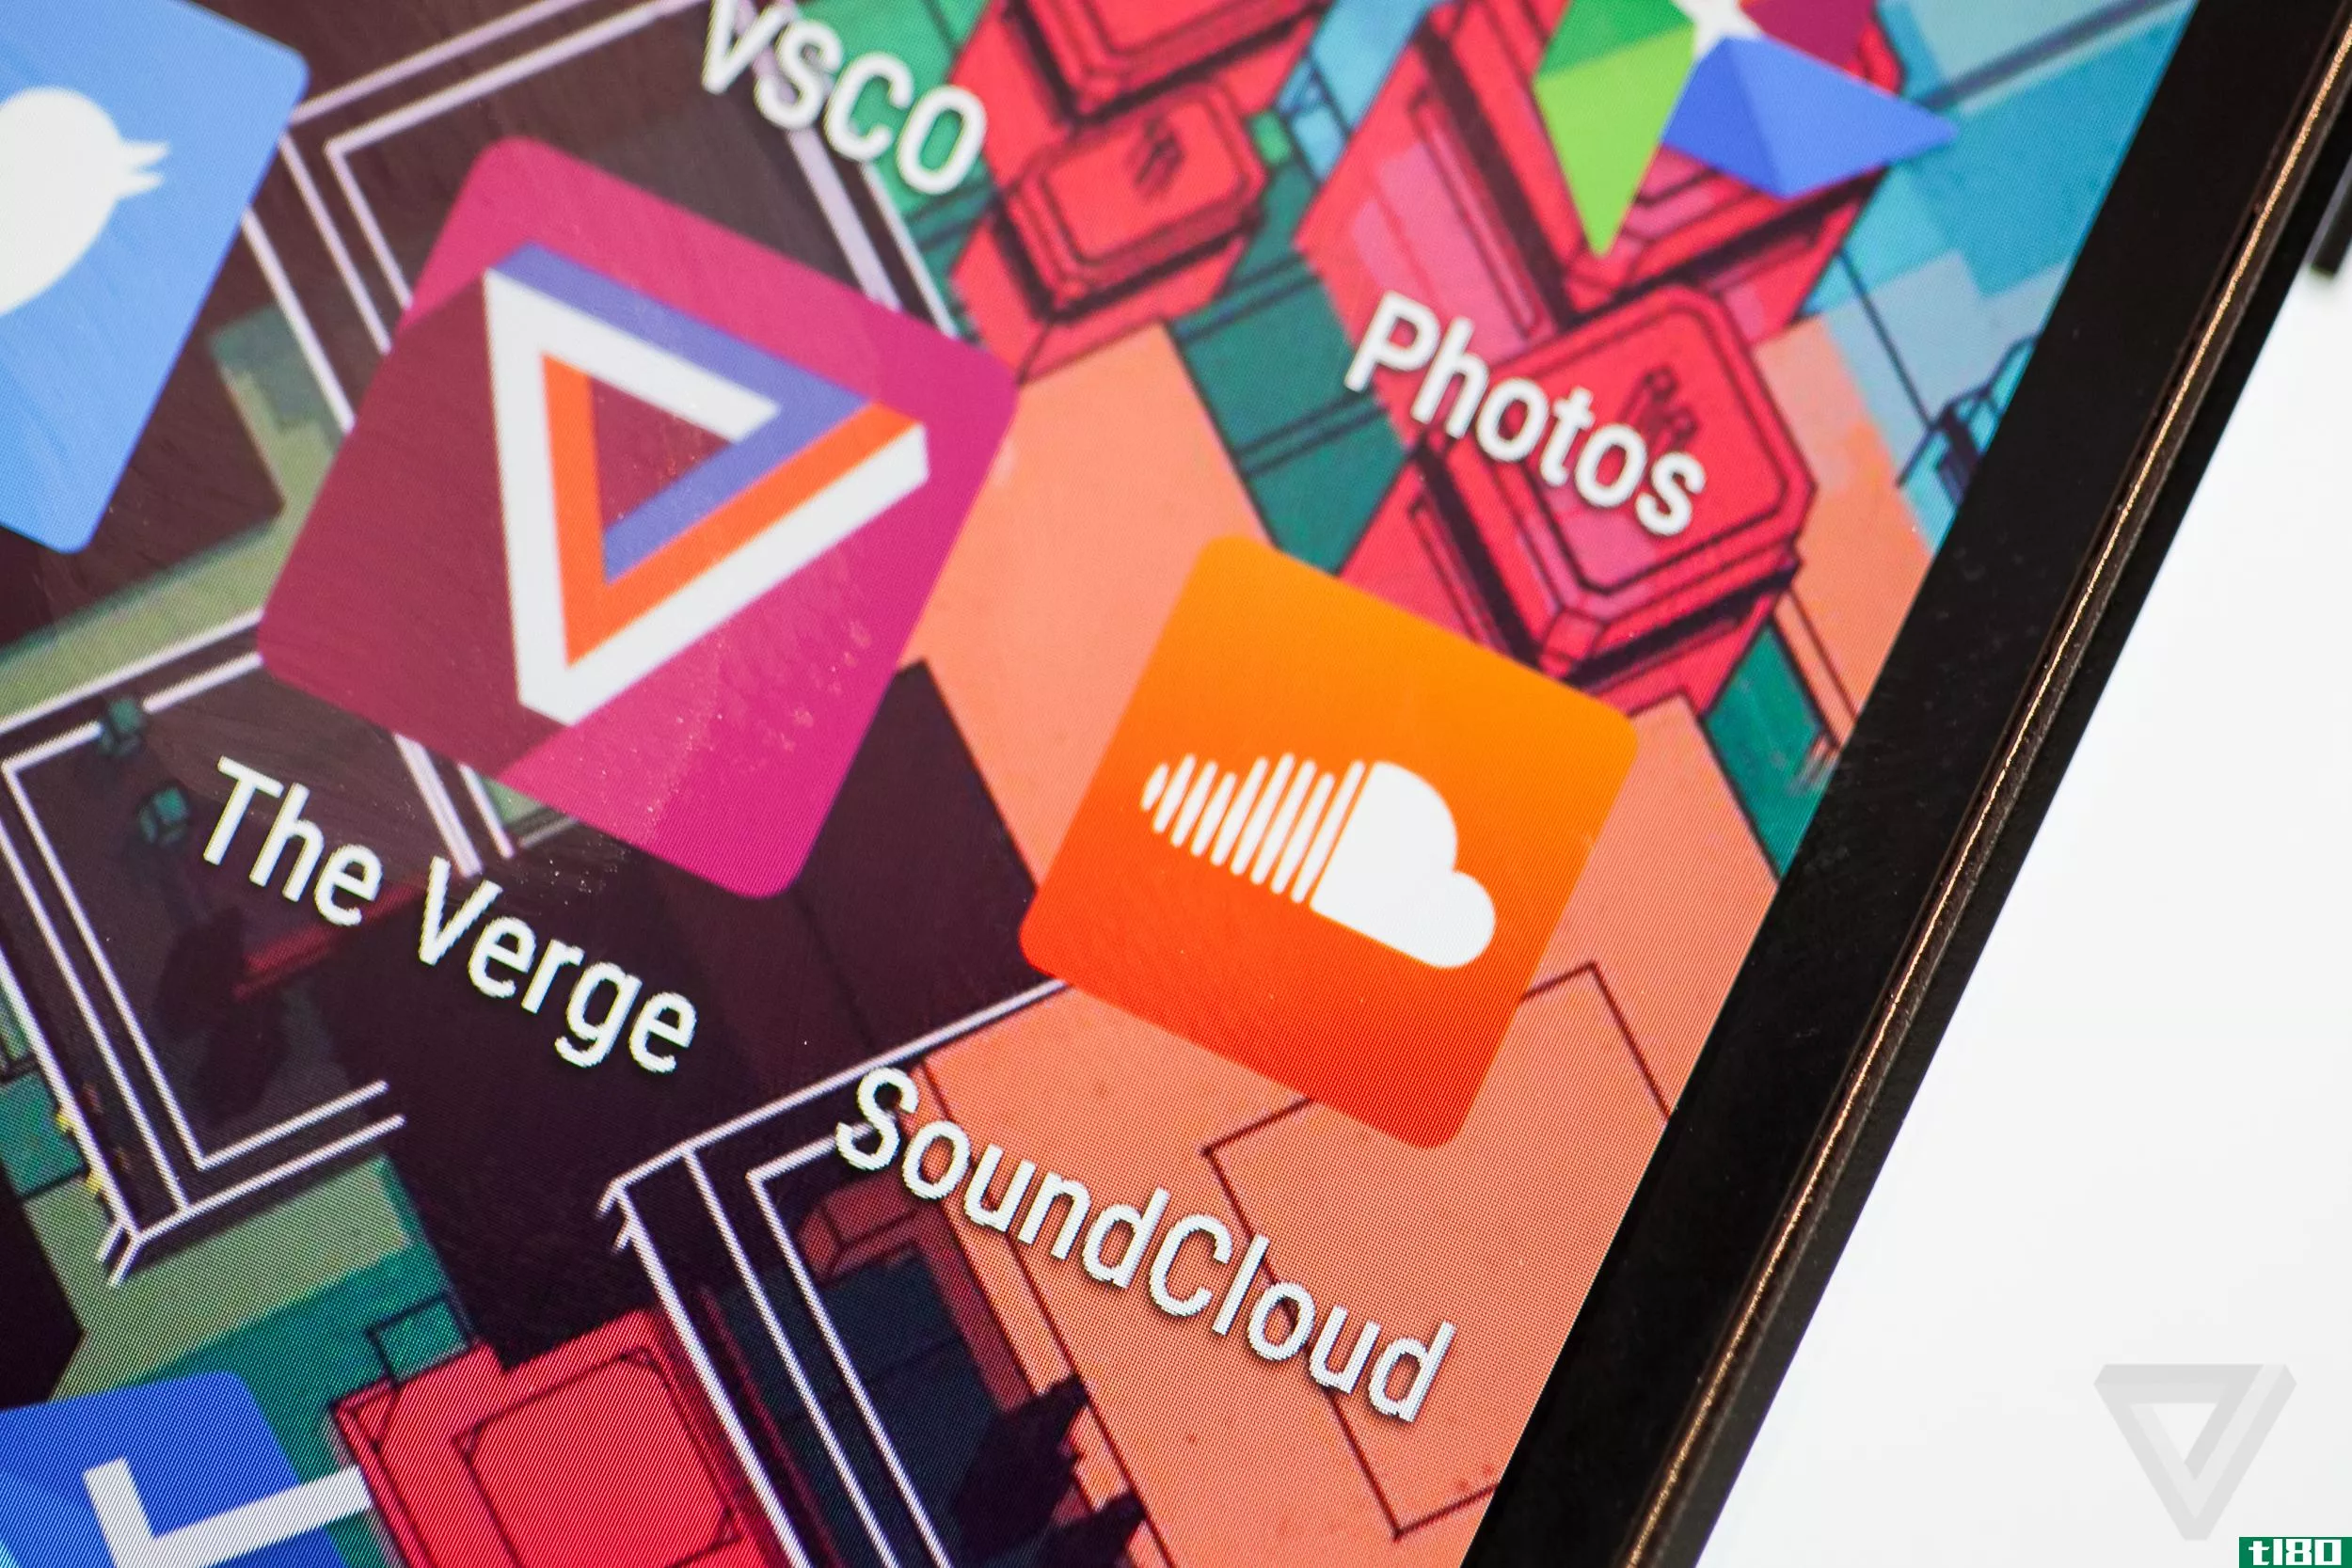 soundcloud正在推出订阅音乐服务